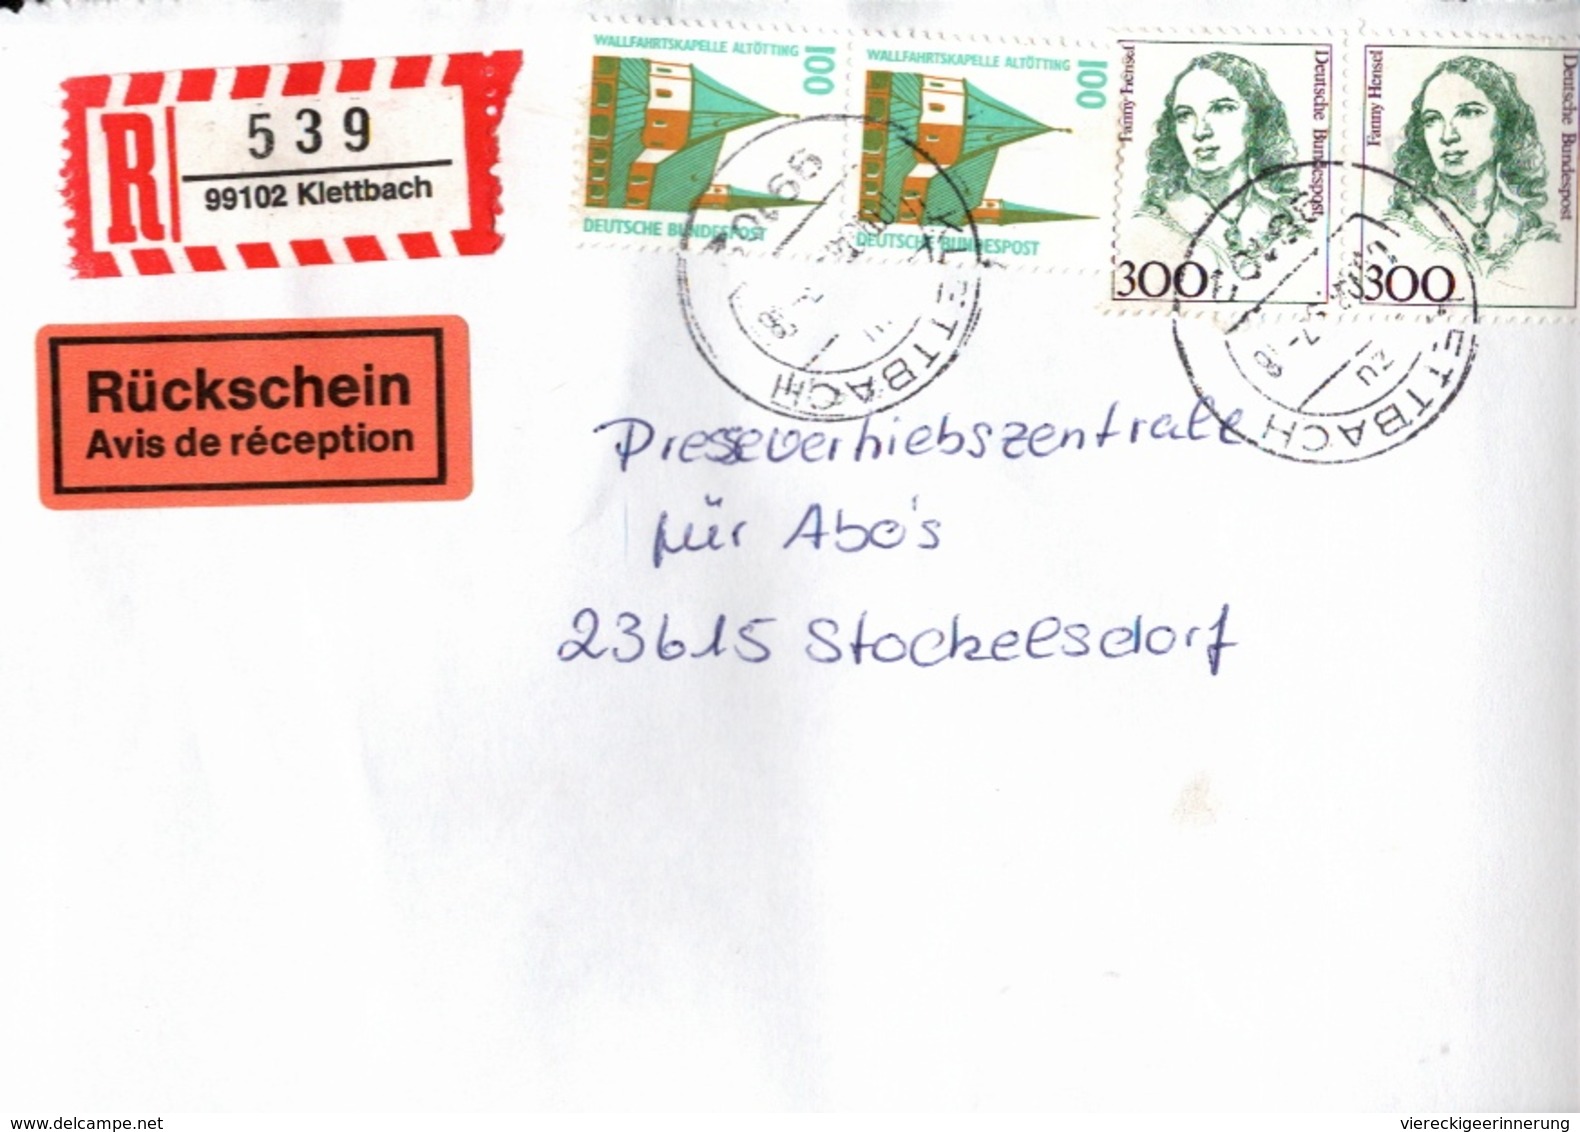 ! 1 Einschreiben Mit Rückschein, R-Zettel  Aus 99102 Klettbach, Thüringen - Etiquettes 'Recommandé' & 'Valeur Déclarée'